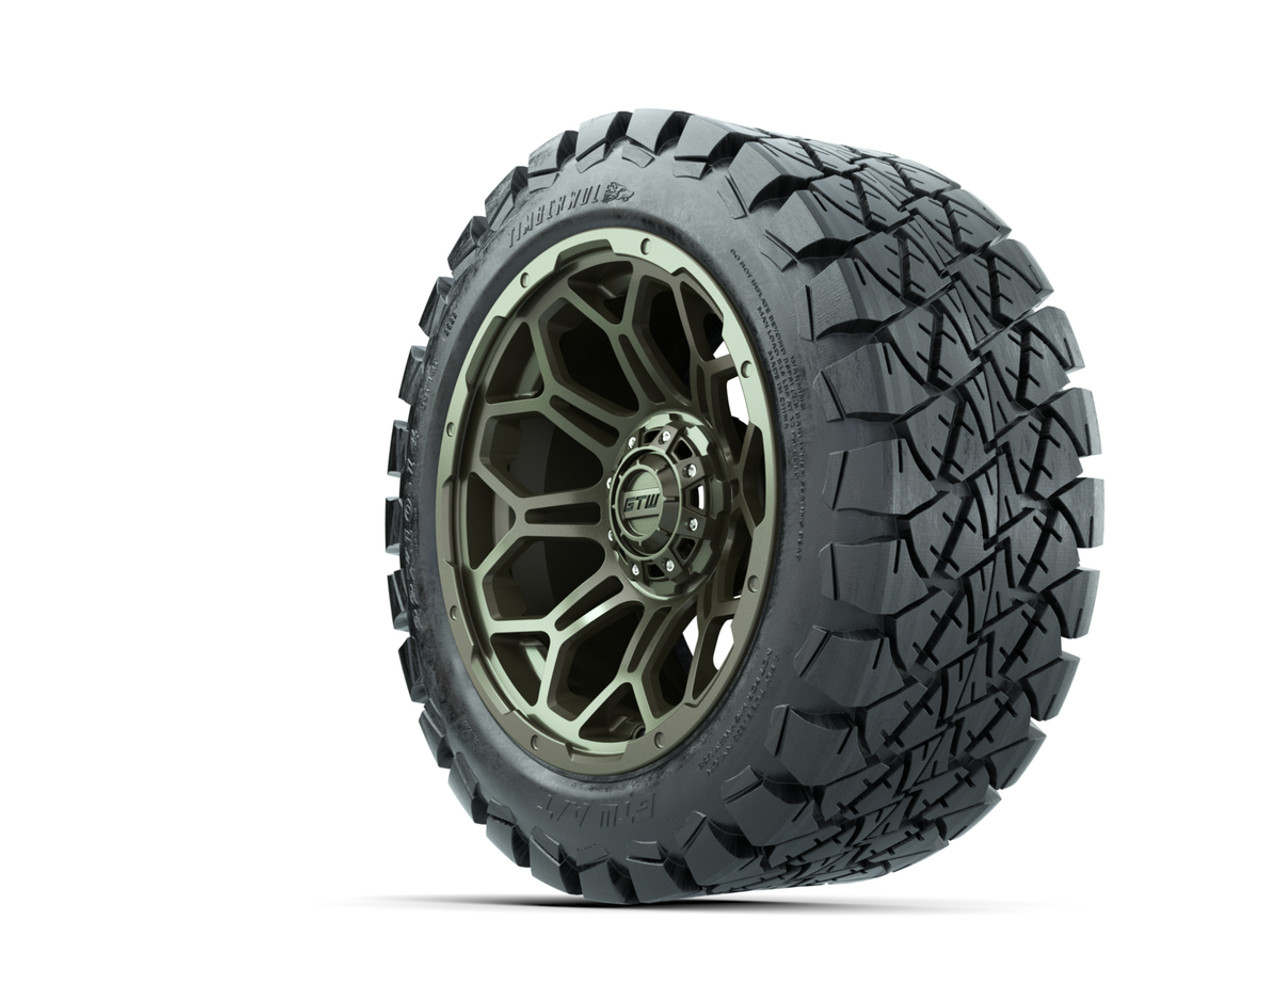 14” GTW Bravo Matte Recon Green Wheels with 22” Timberwolf Mud Tires – Set of 4